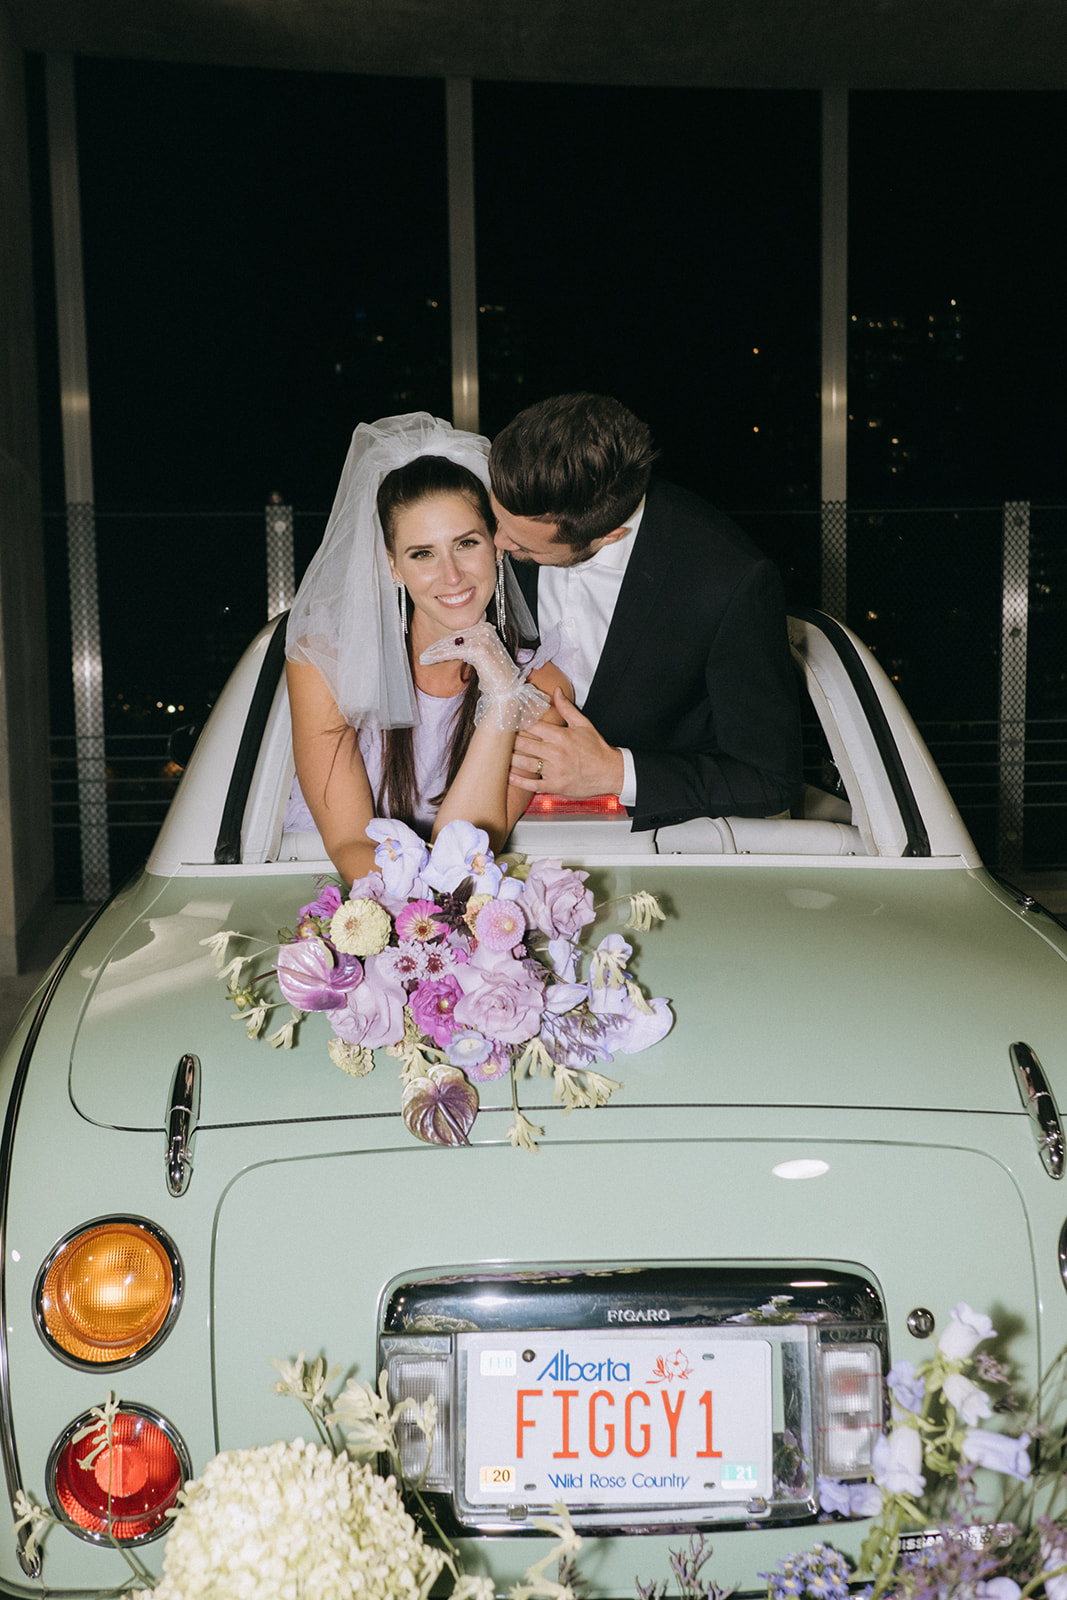 flash photography, trendy wedding photographs, retro wedding inspiration with vintage car